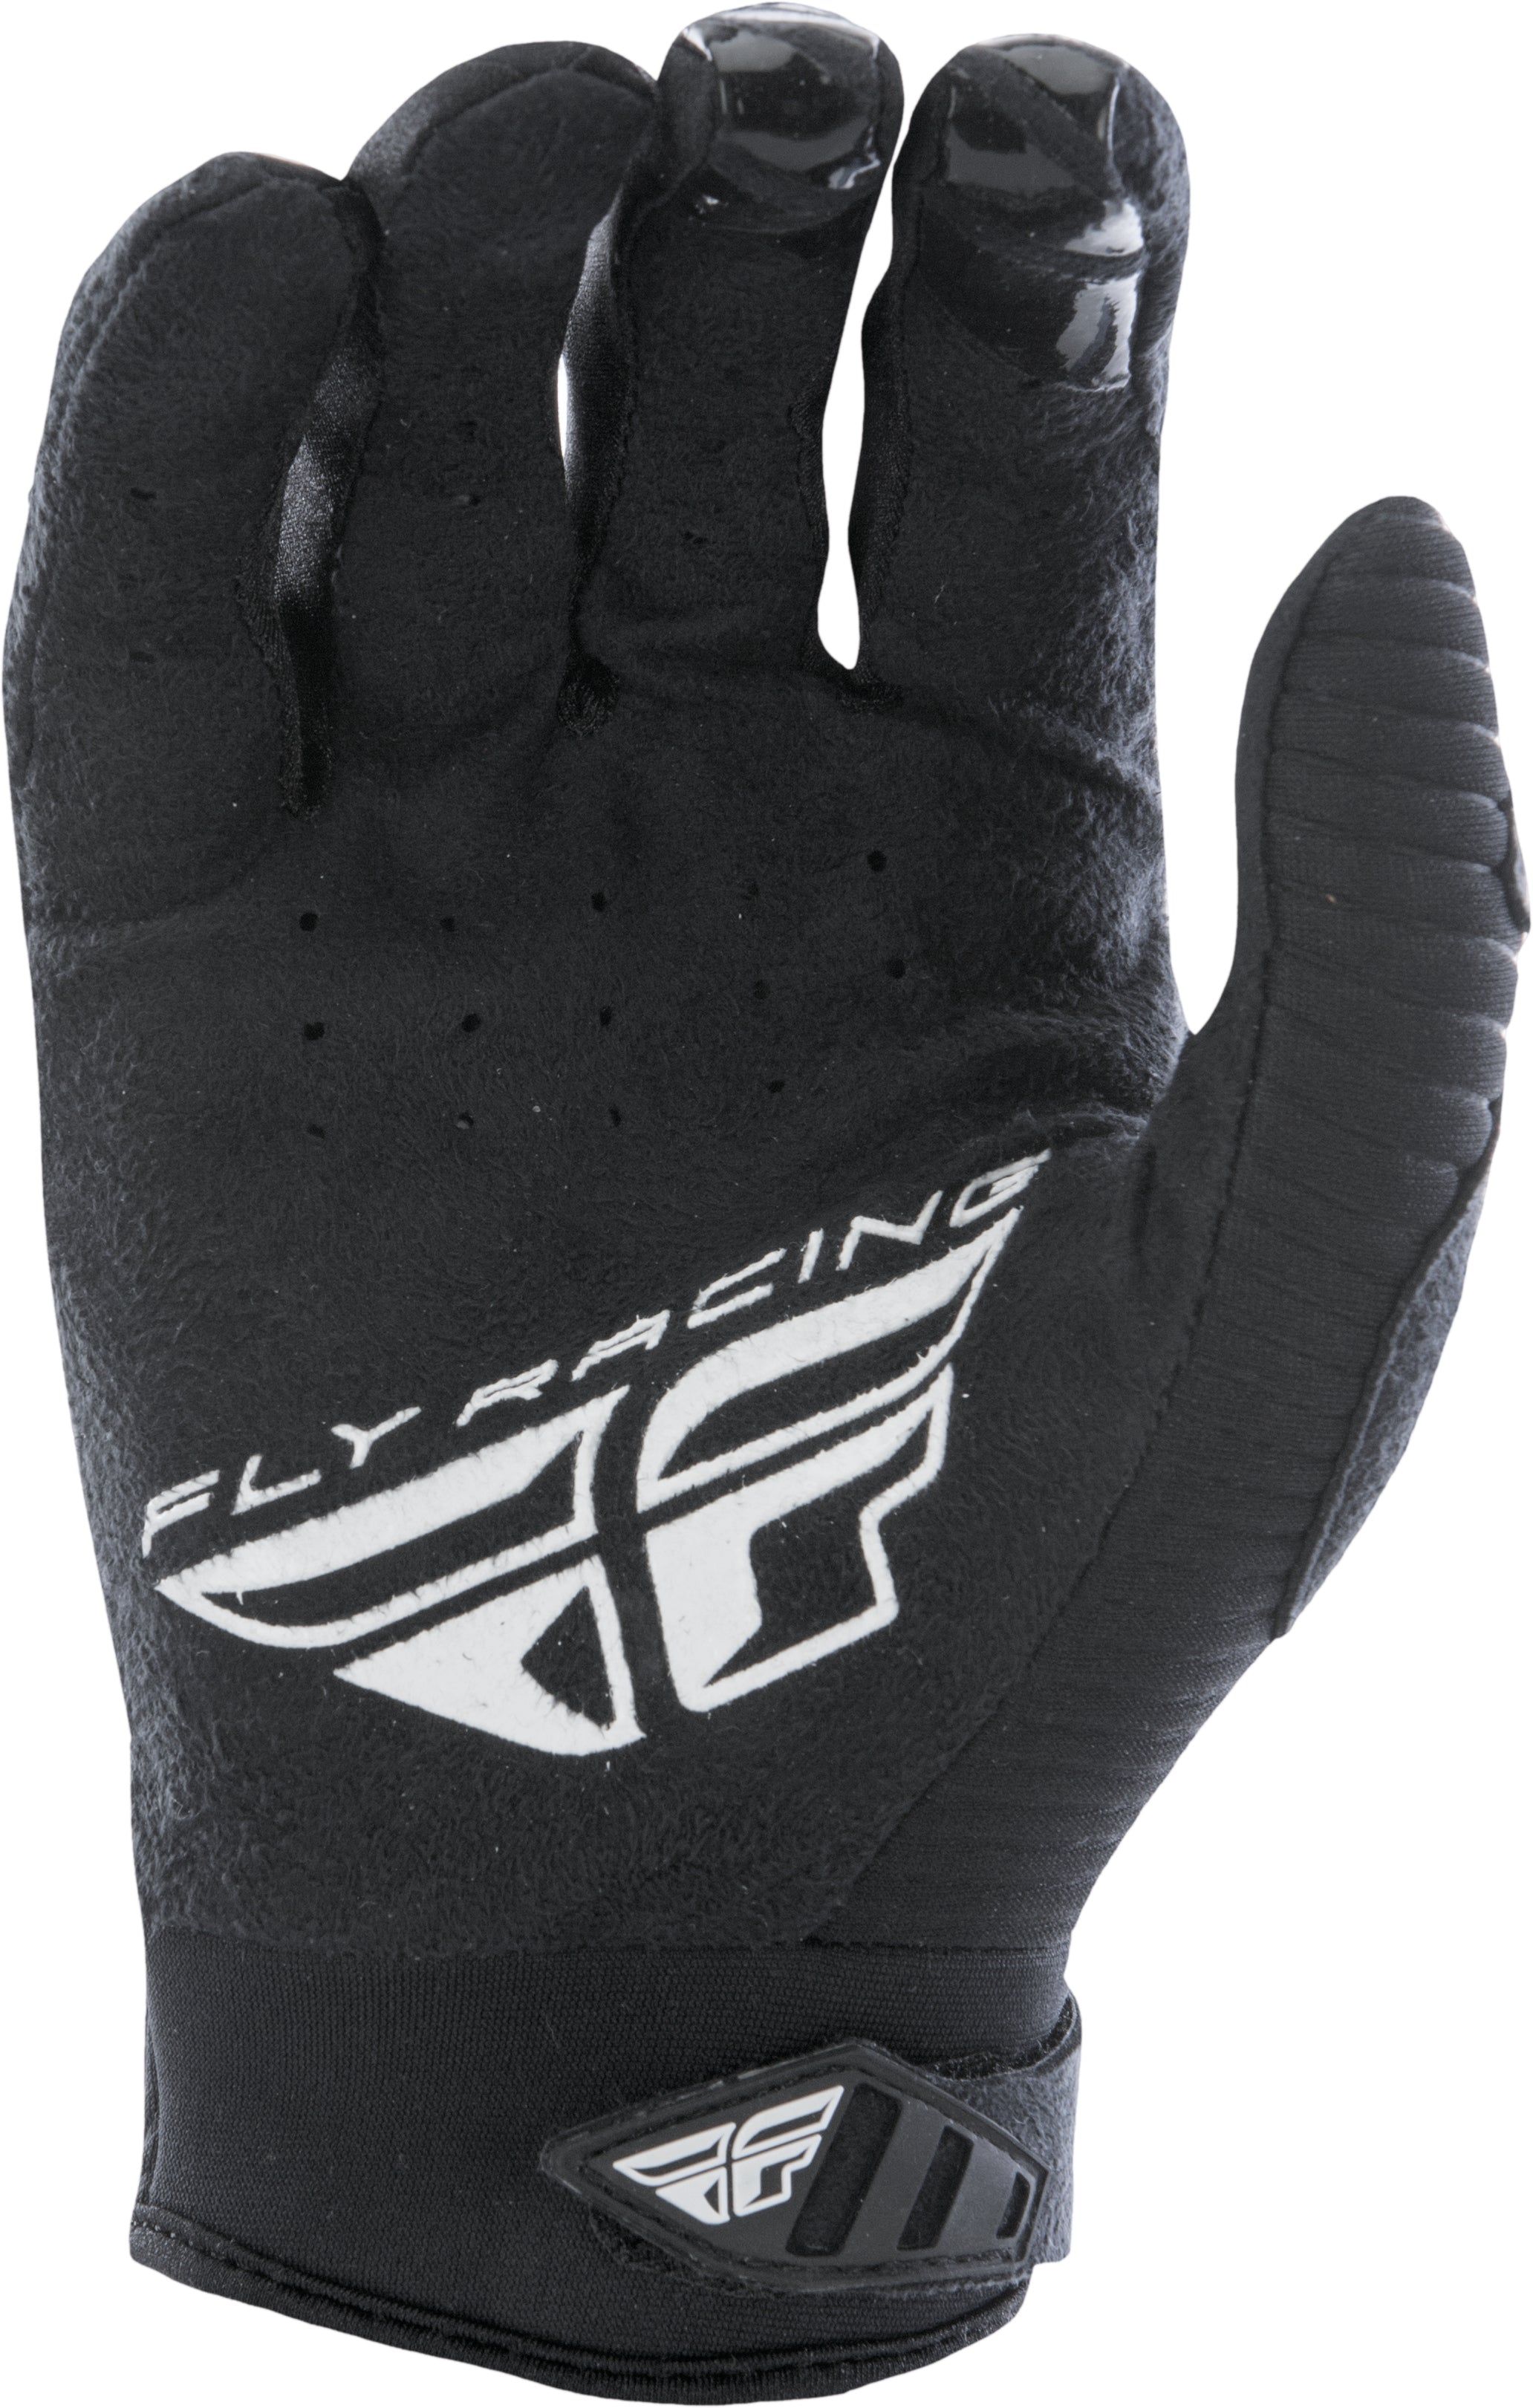 Patrol Xc Lite Gloves Black Sz 10